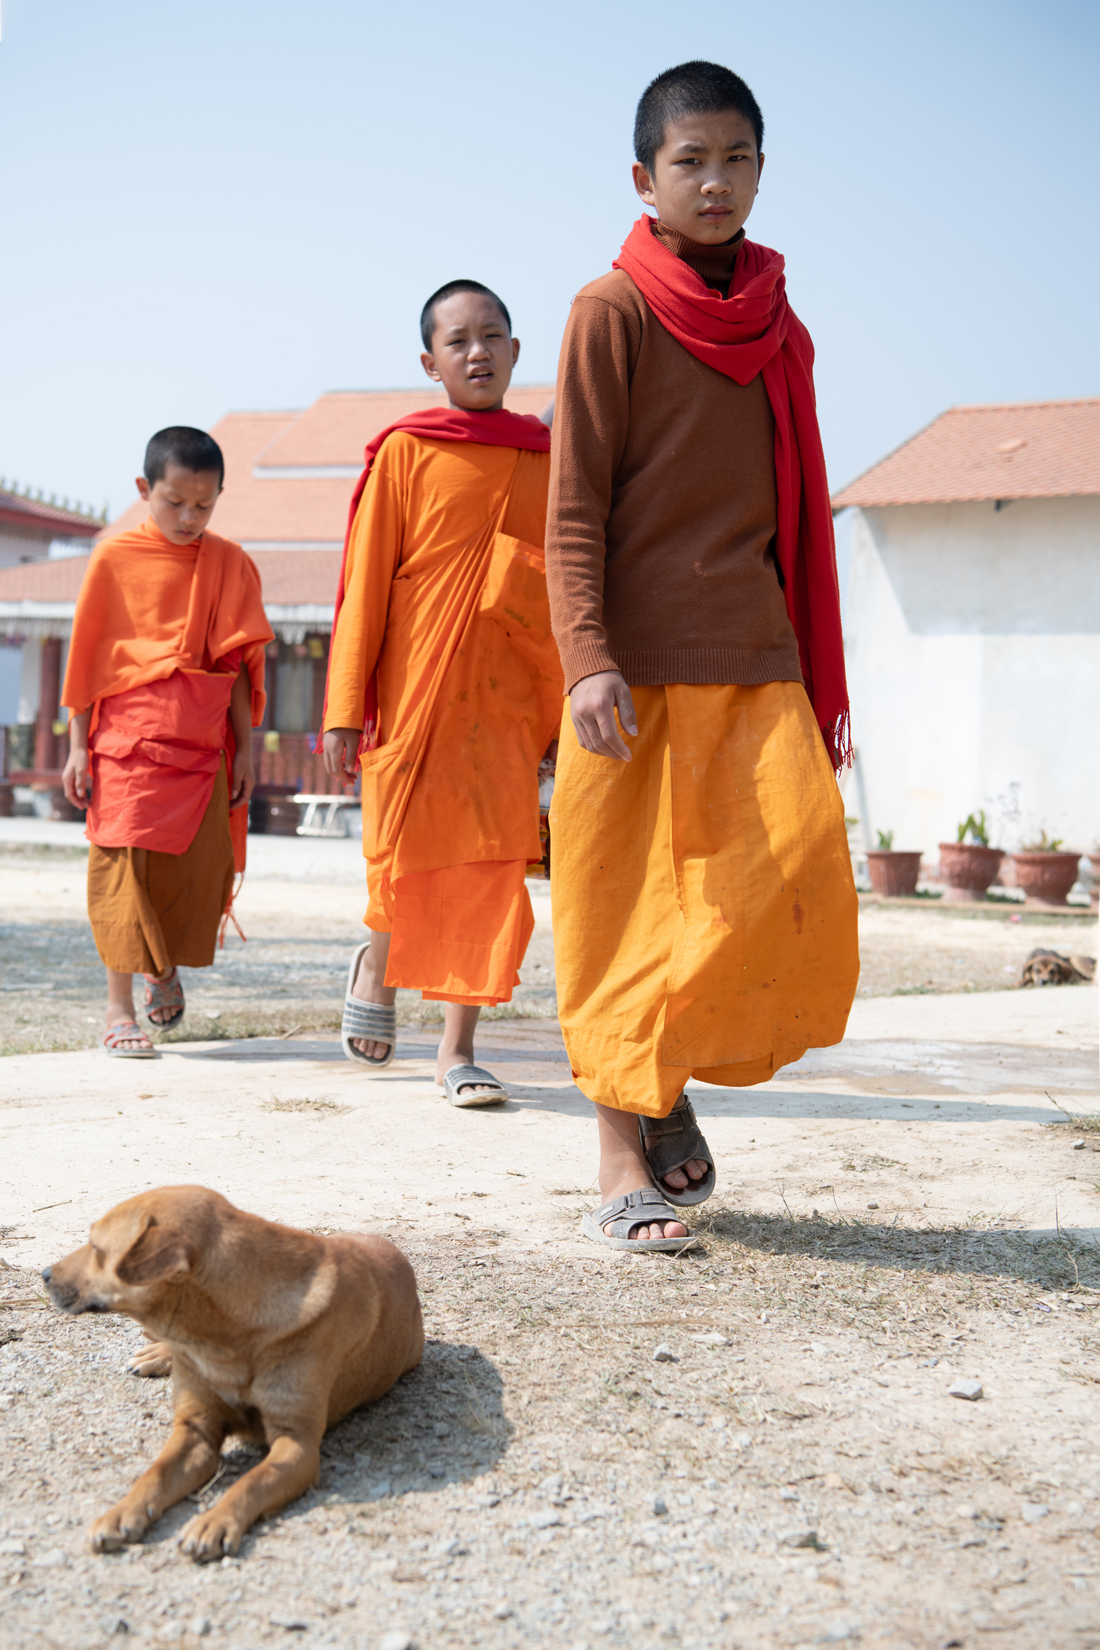 a group of people walking in orange robes